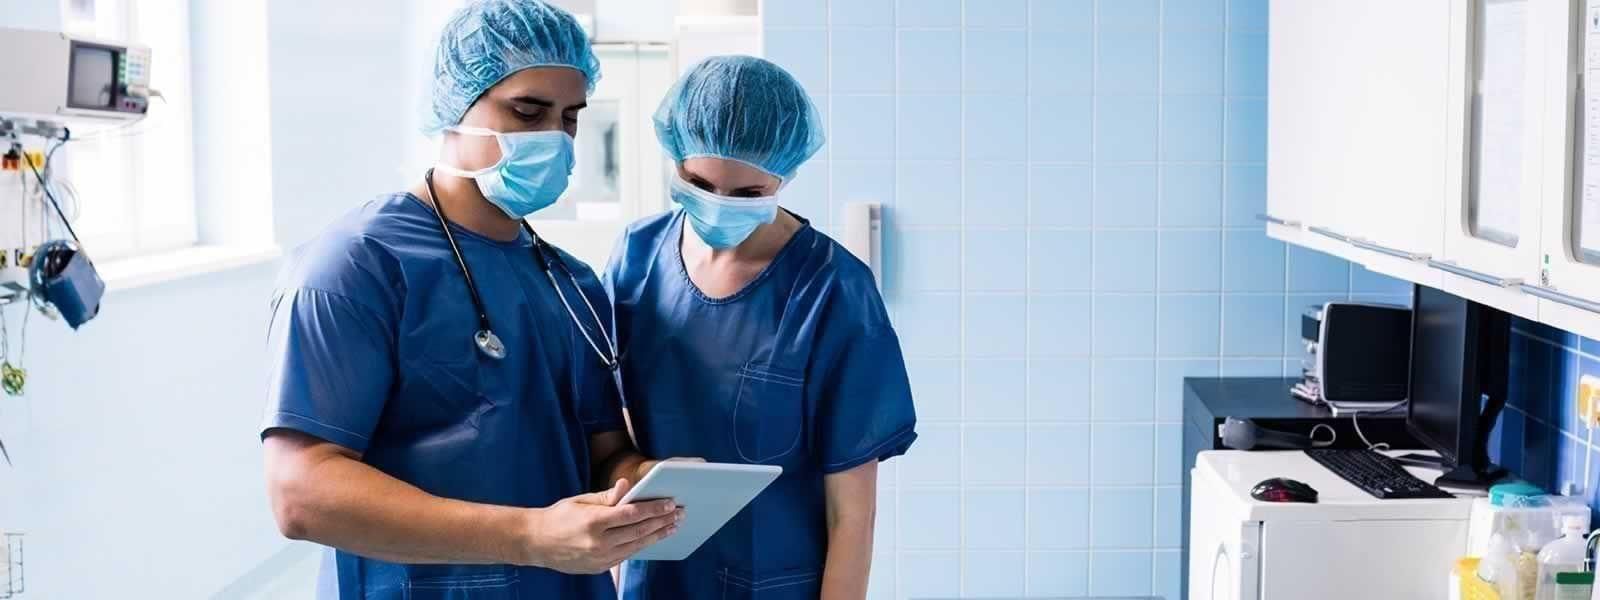 Become a Surgeon: Surgery Education